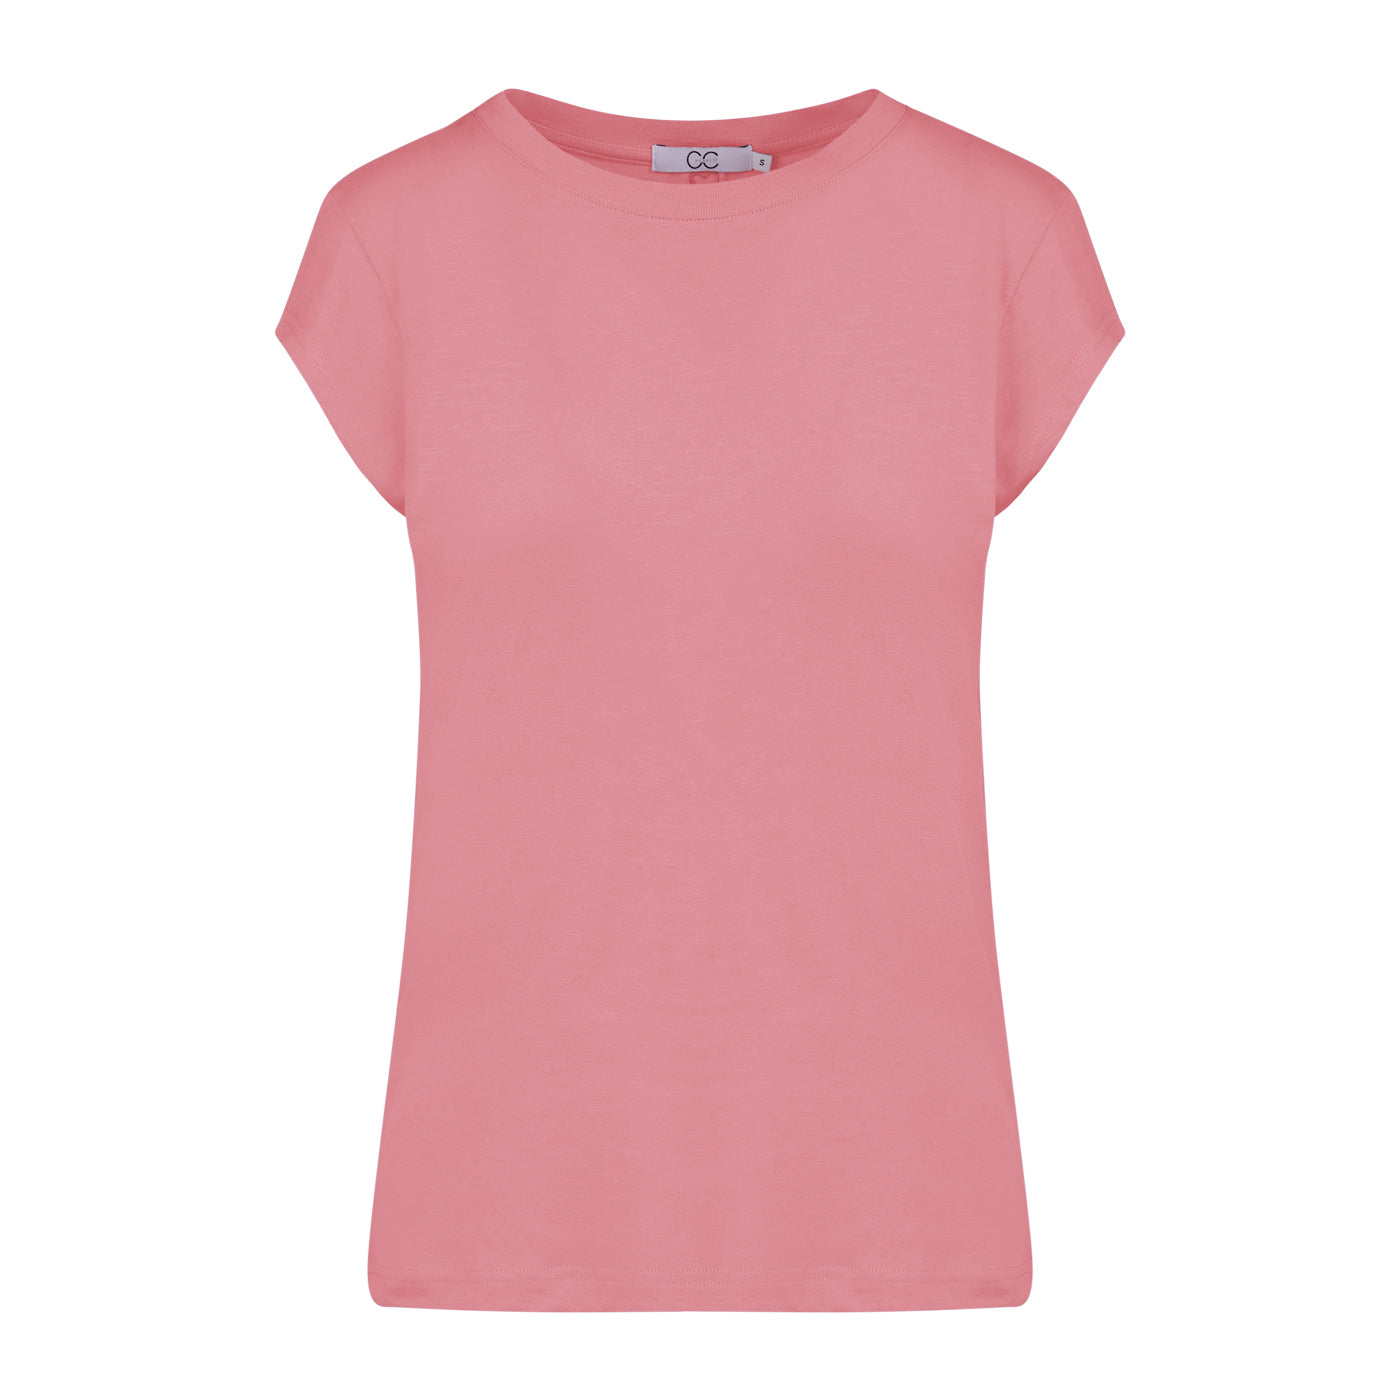 CC Heart Basic T-Shirt Dust Pink